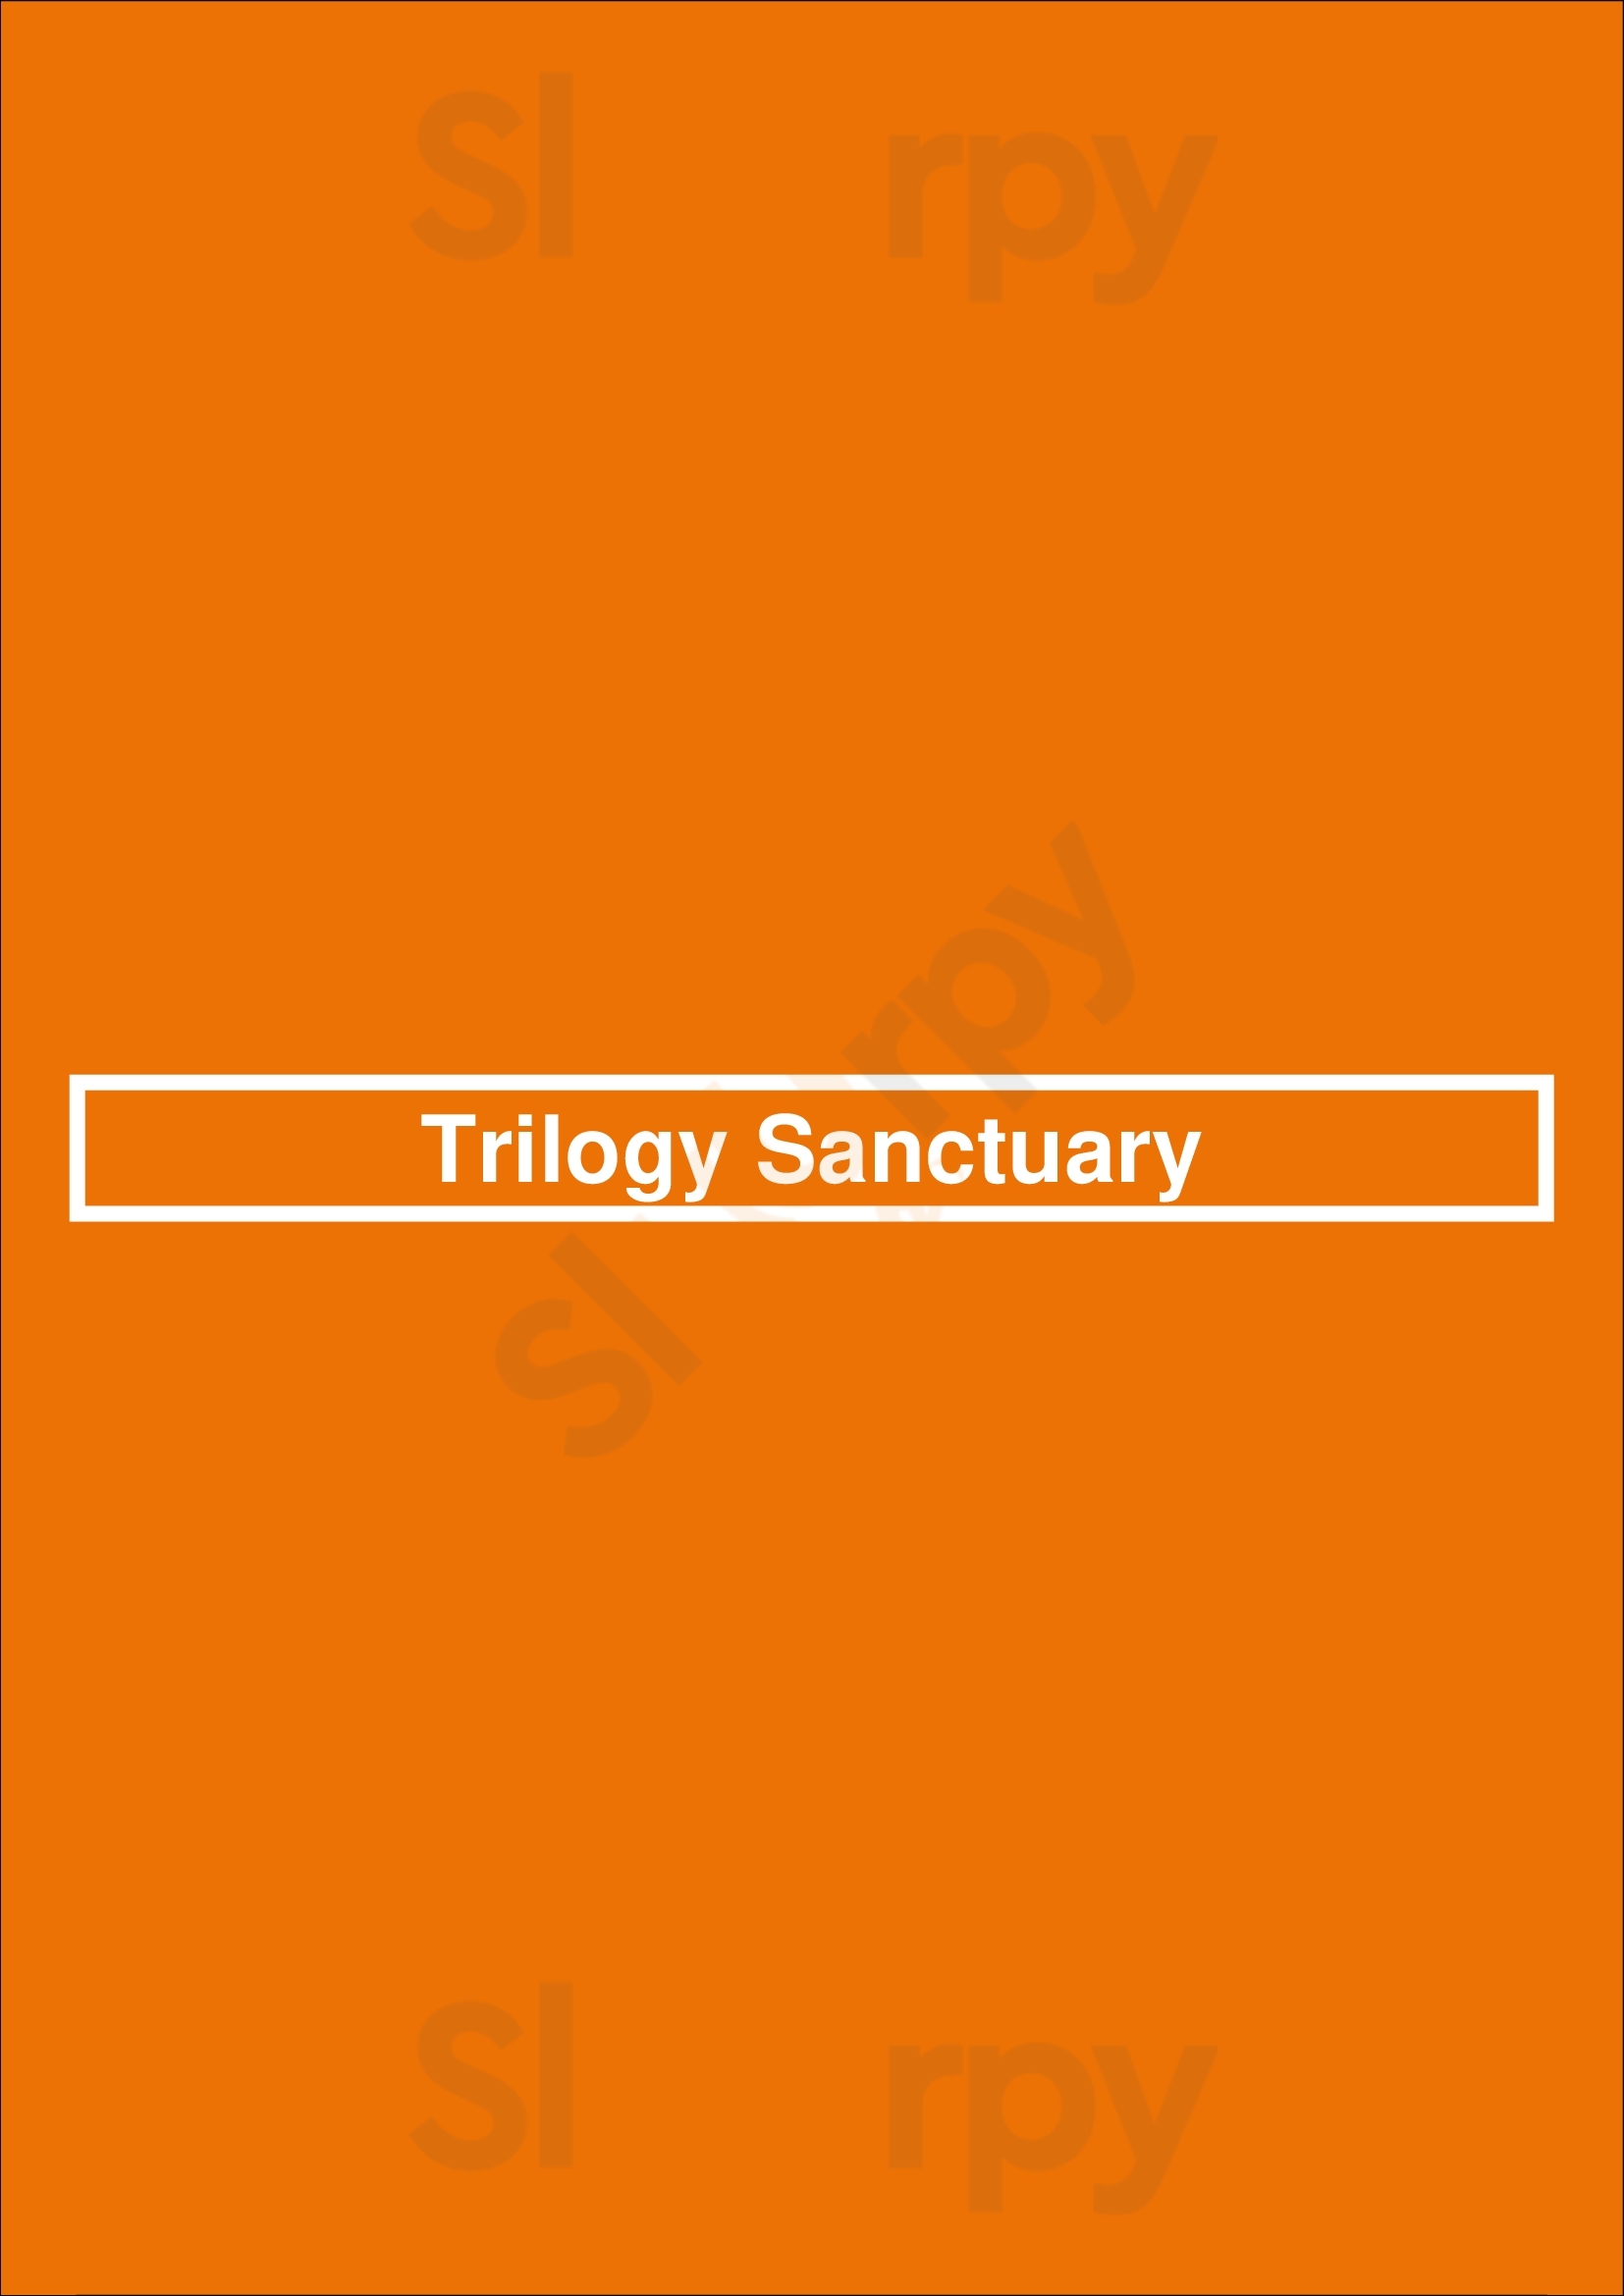 Trilogy Sanctuary La Jolla Menu - 1